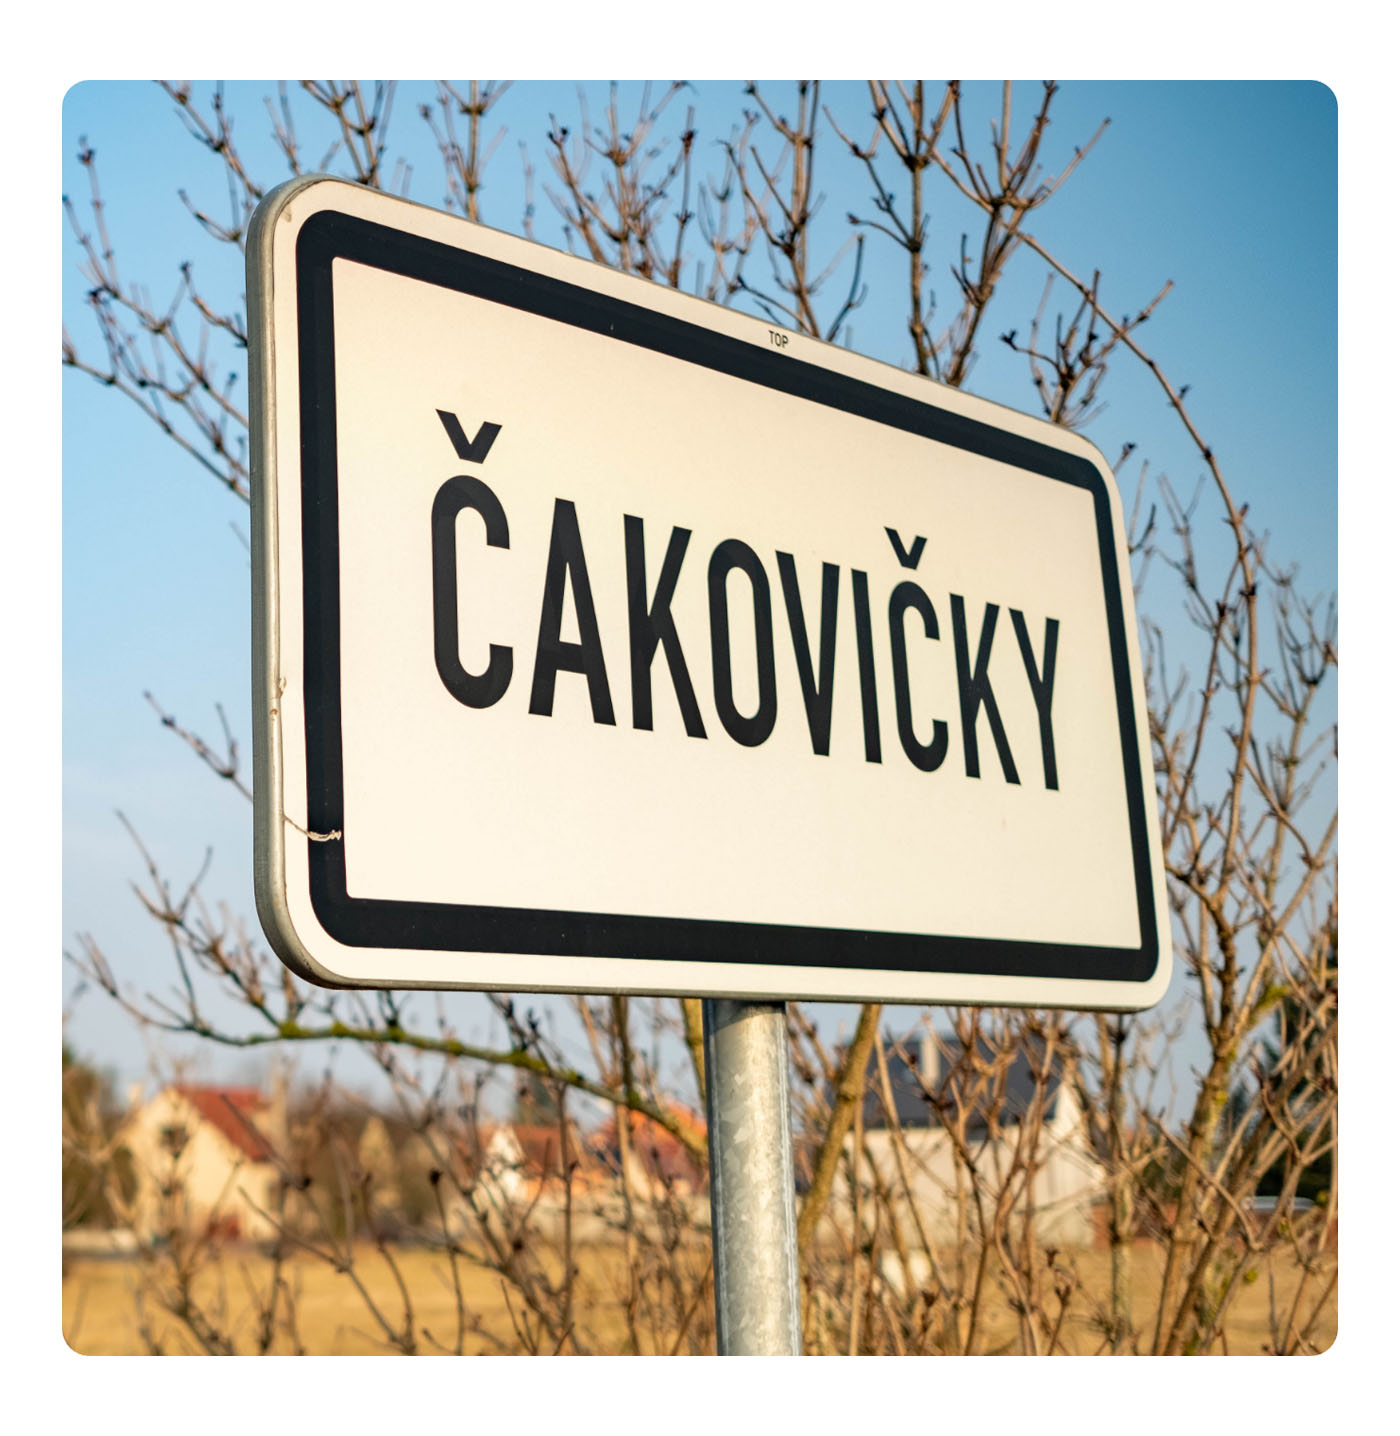 cakovicky_2